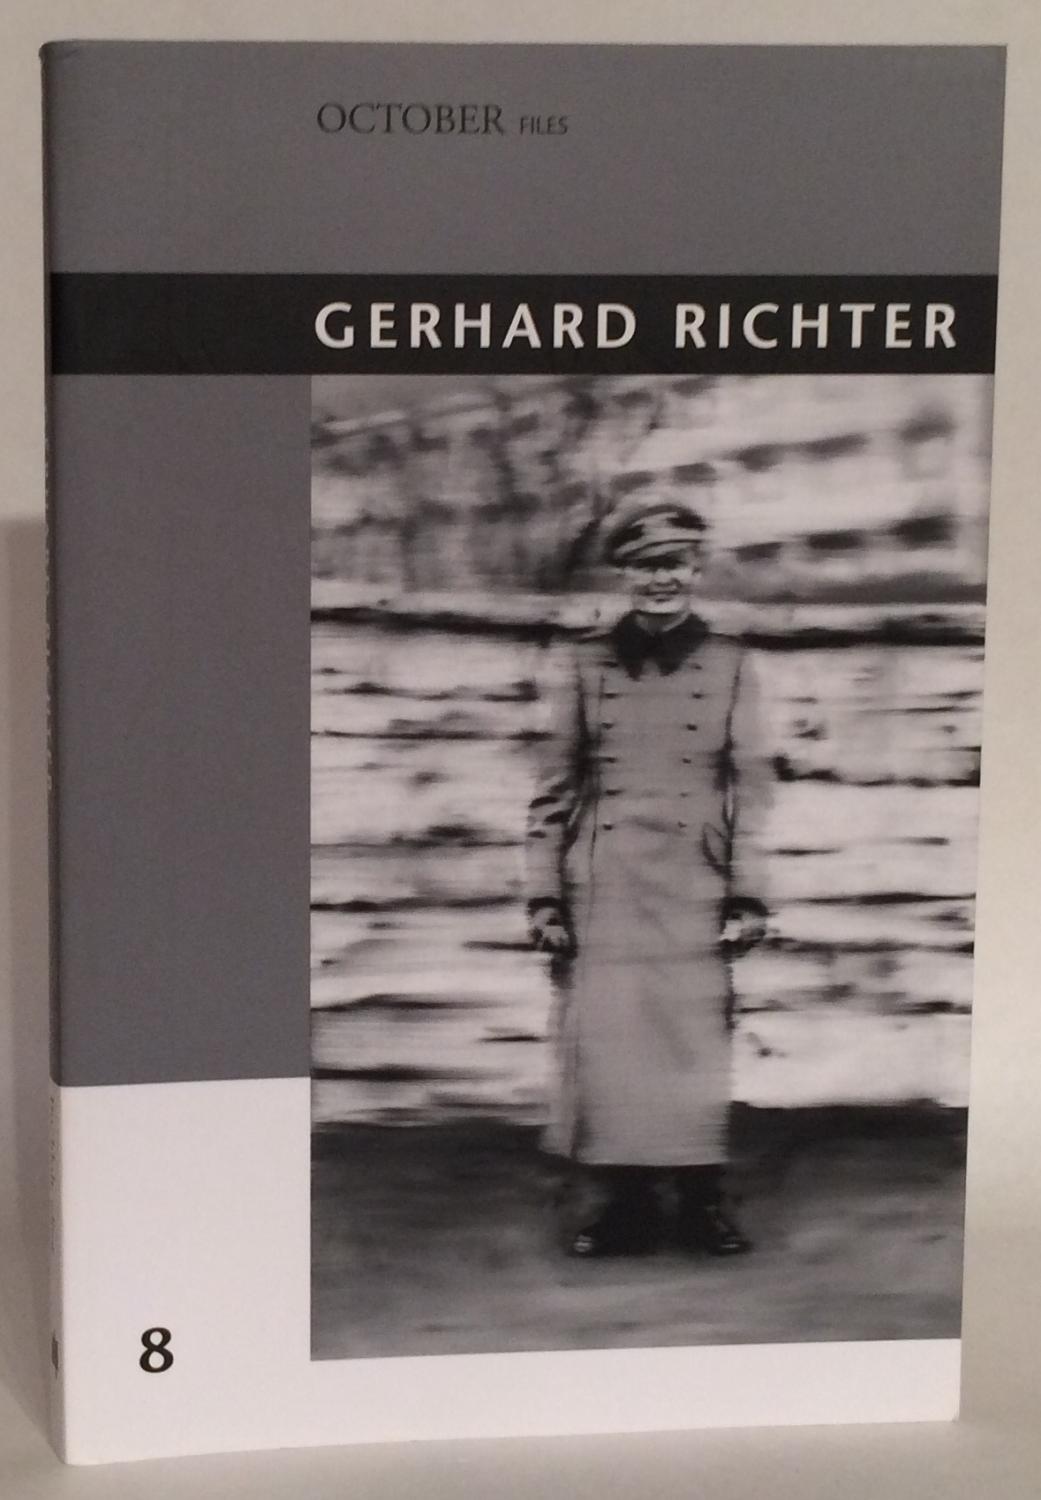 Gerhard Richter. October Files. - Buchloh, Benjamin H. D., ed.; Gerhard Richter